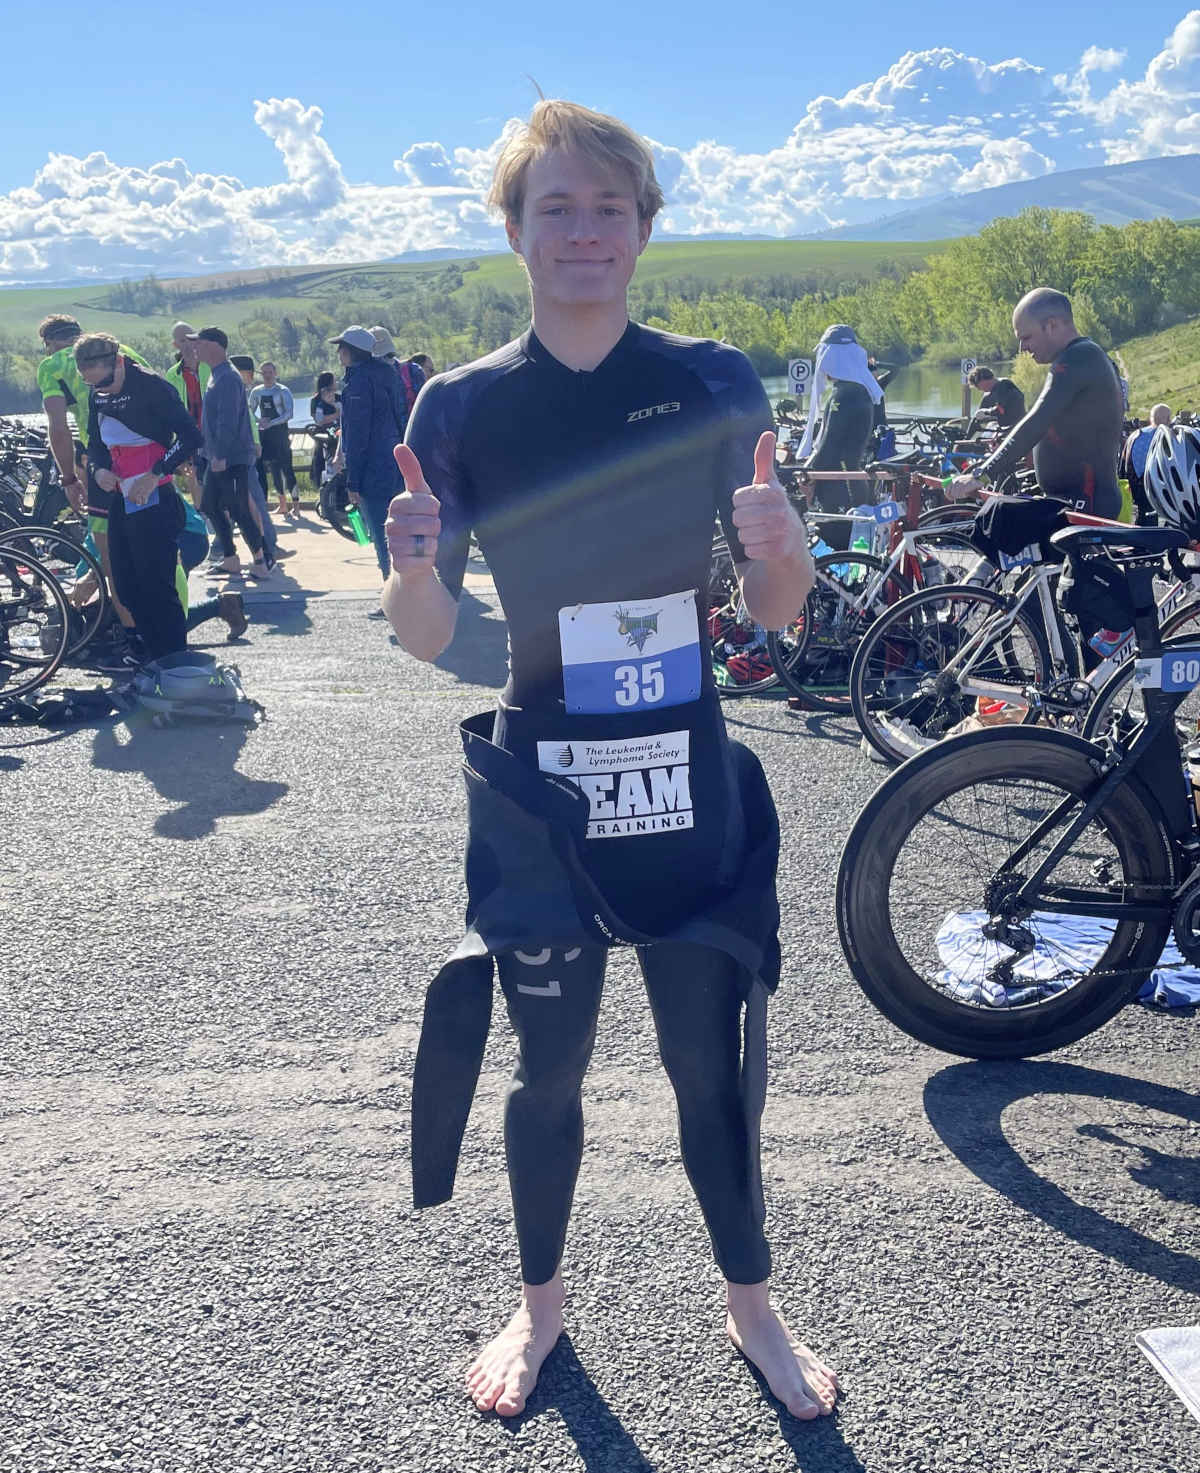 University of Idaho student Ethan Sunseri smiling with two thumbs up after marathon training